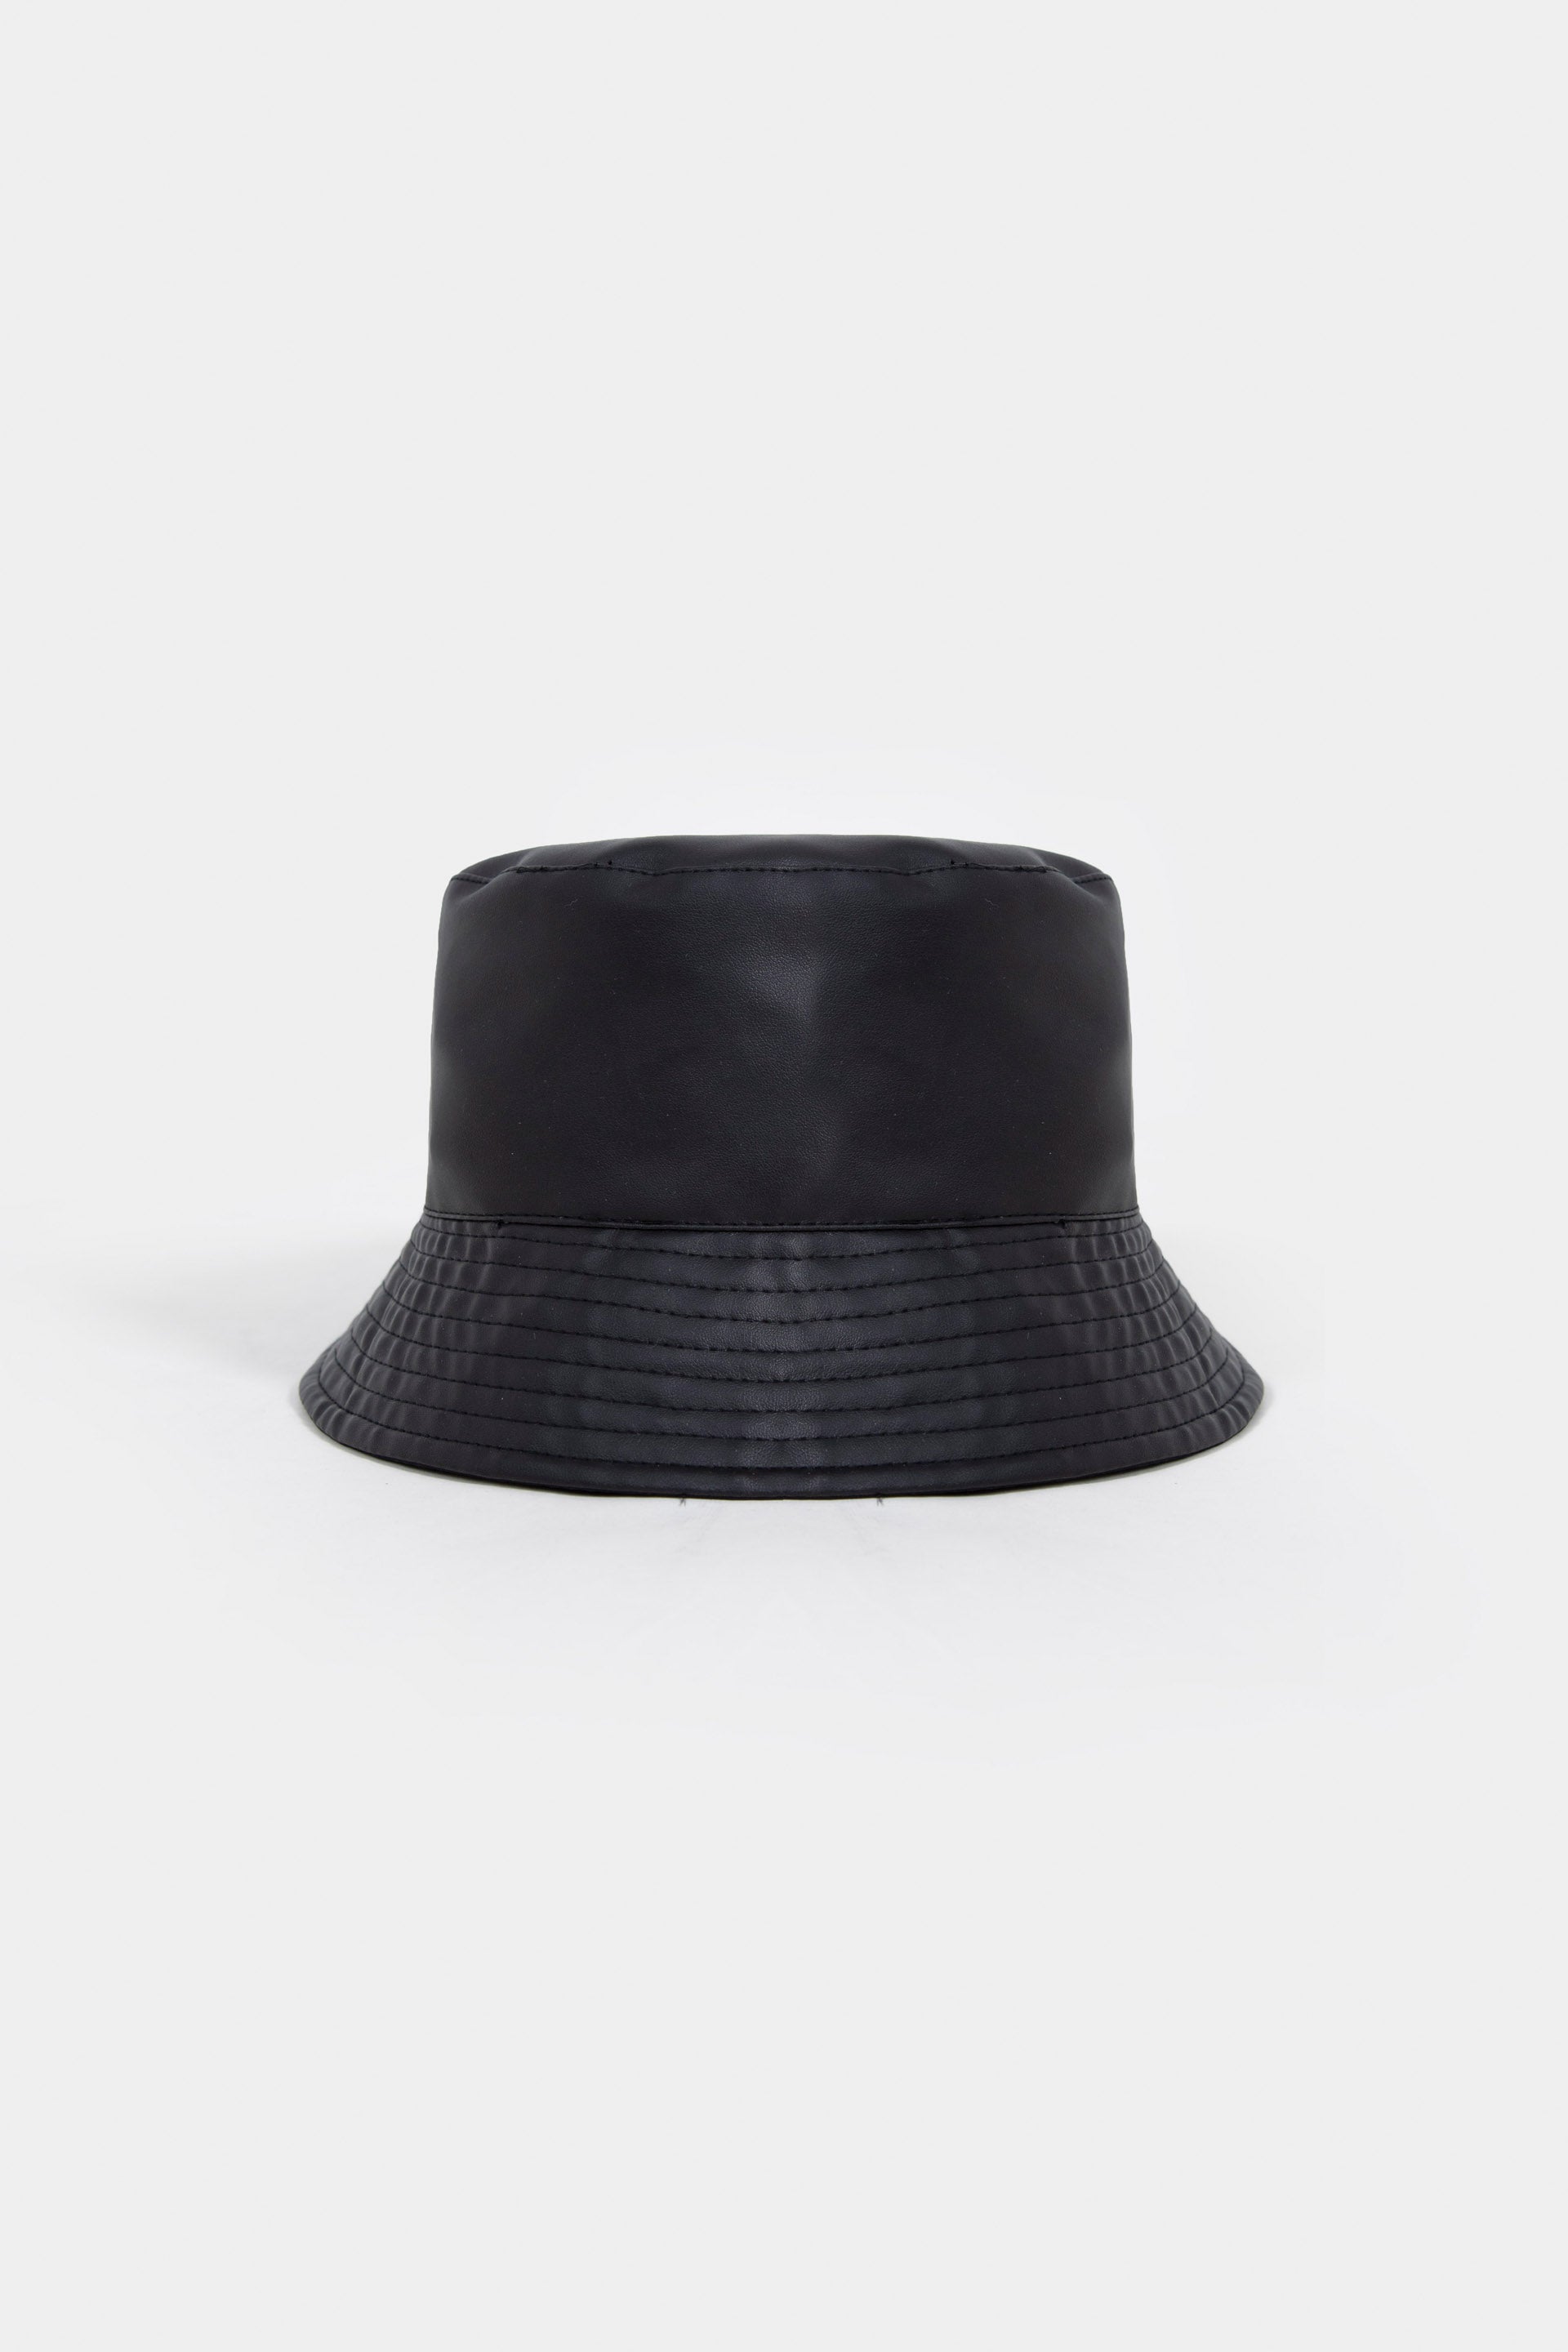 Pu leather bucket hat